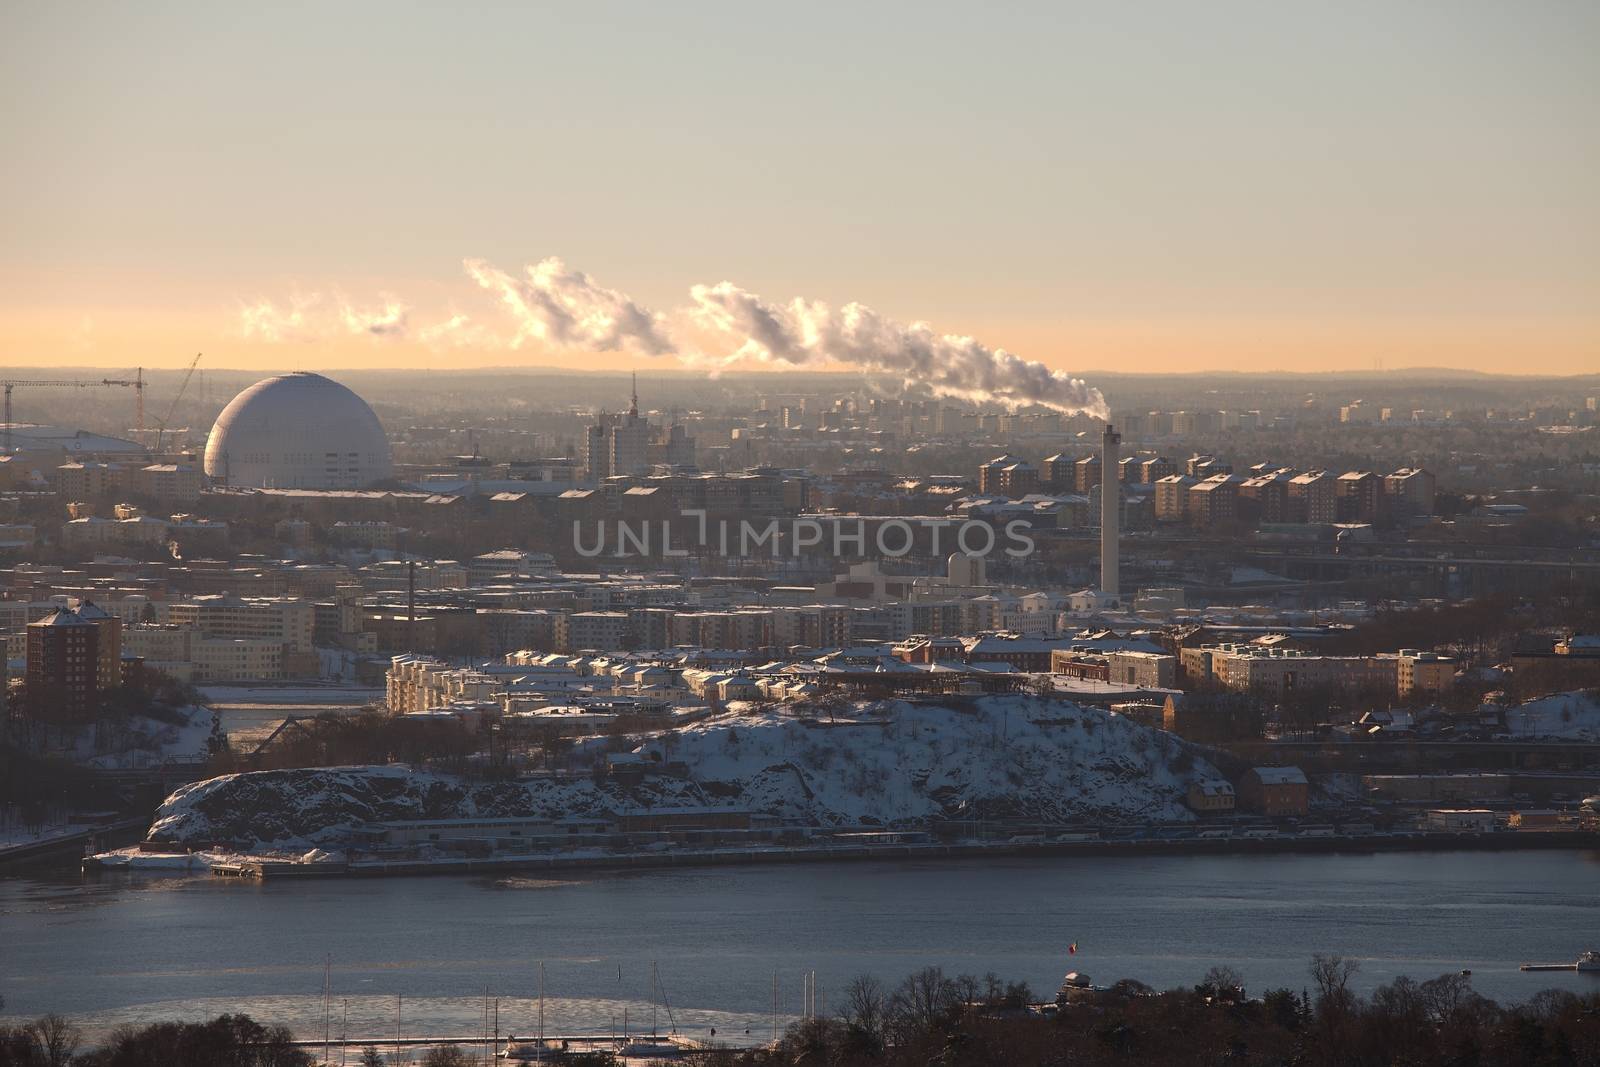 Stockholm winter view by Gudella